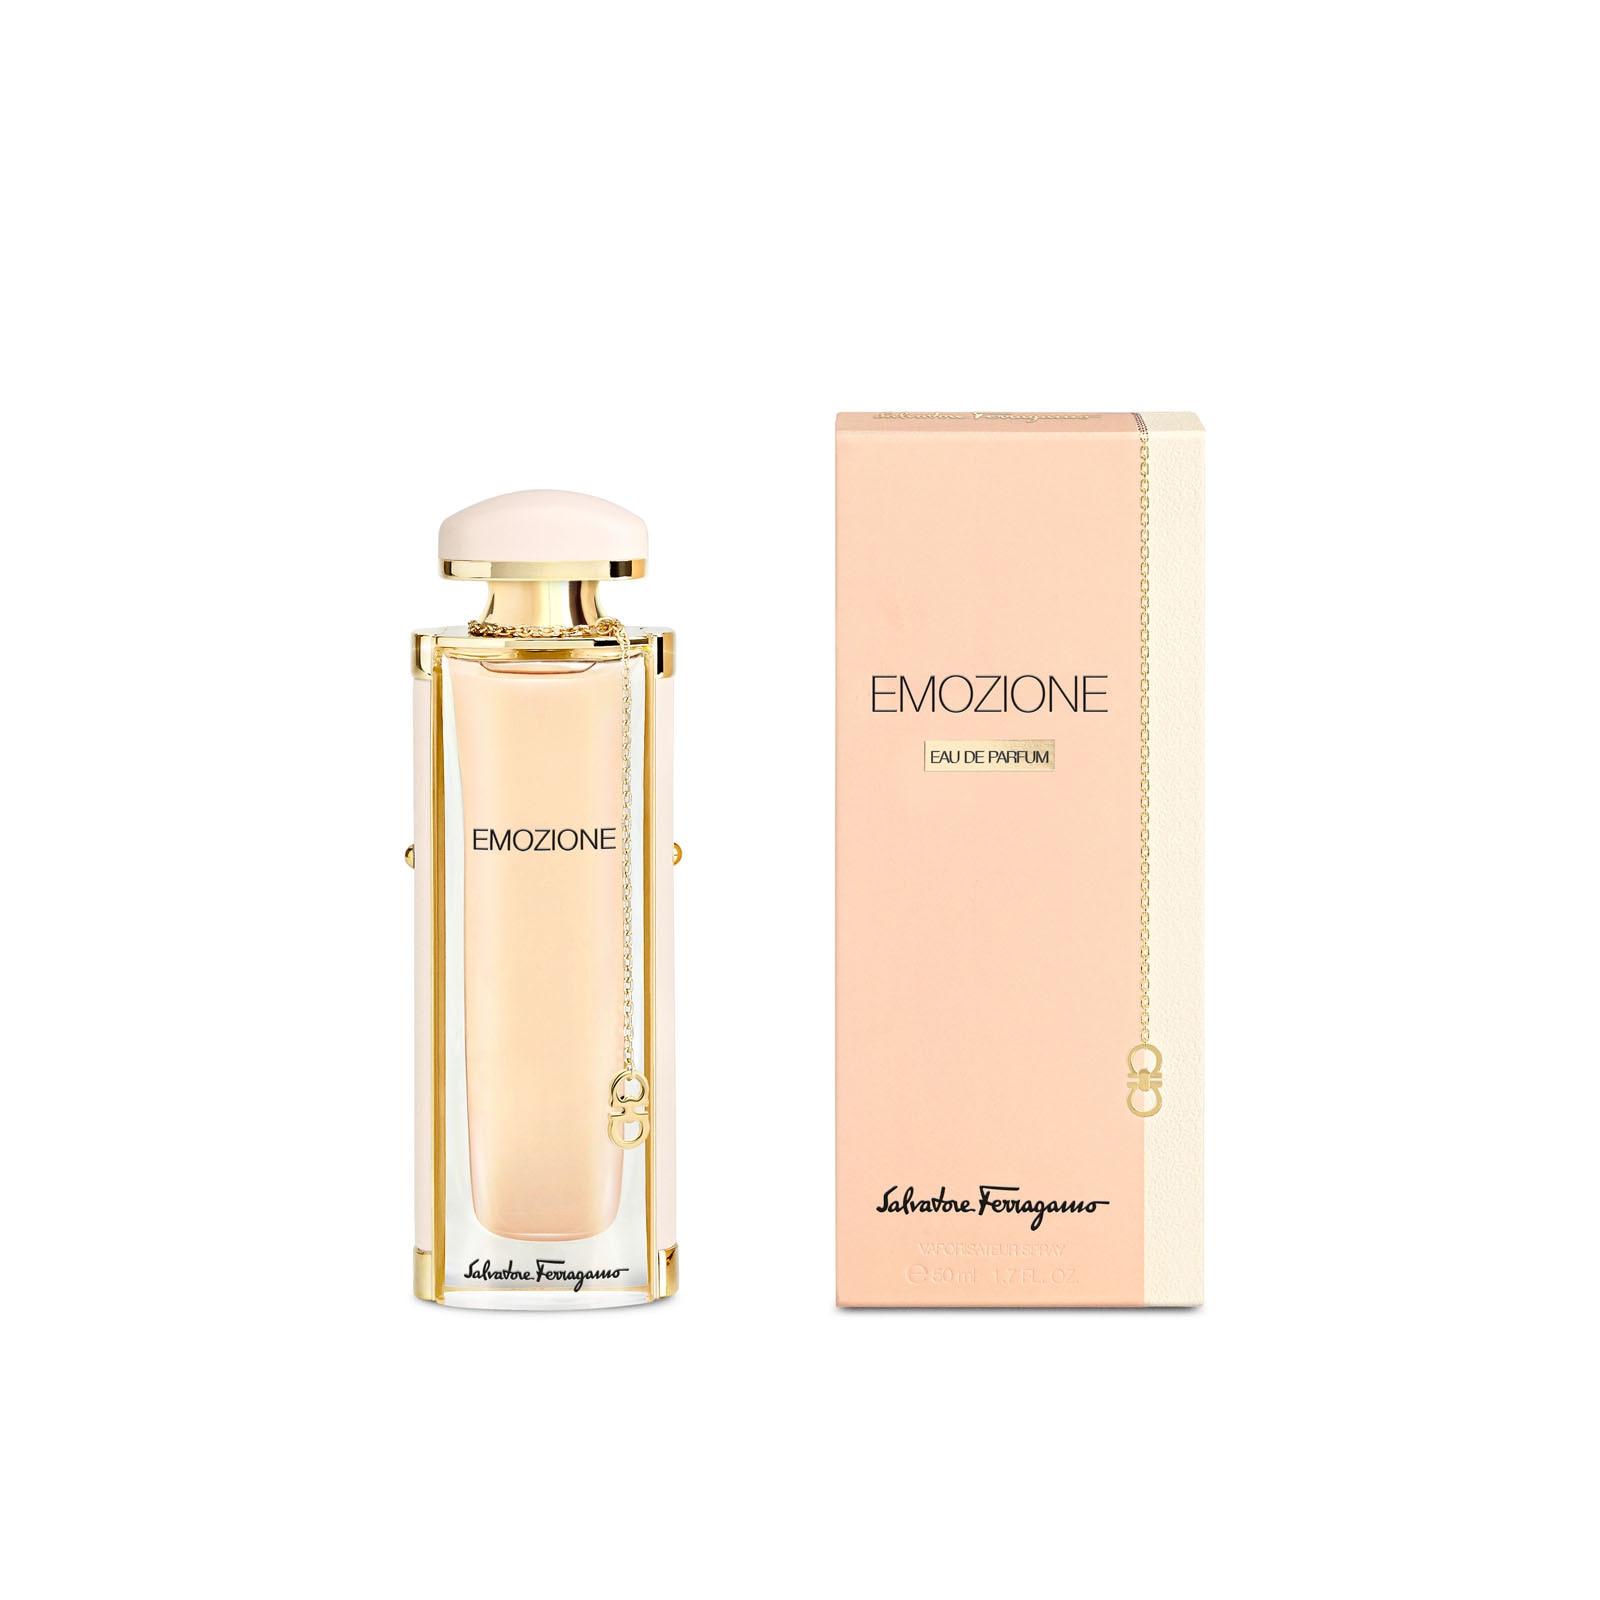 Salvatore Ferragamo Emozione Női parfüm, Eau de parfum, 50ml - eMAG.hu